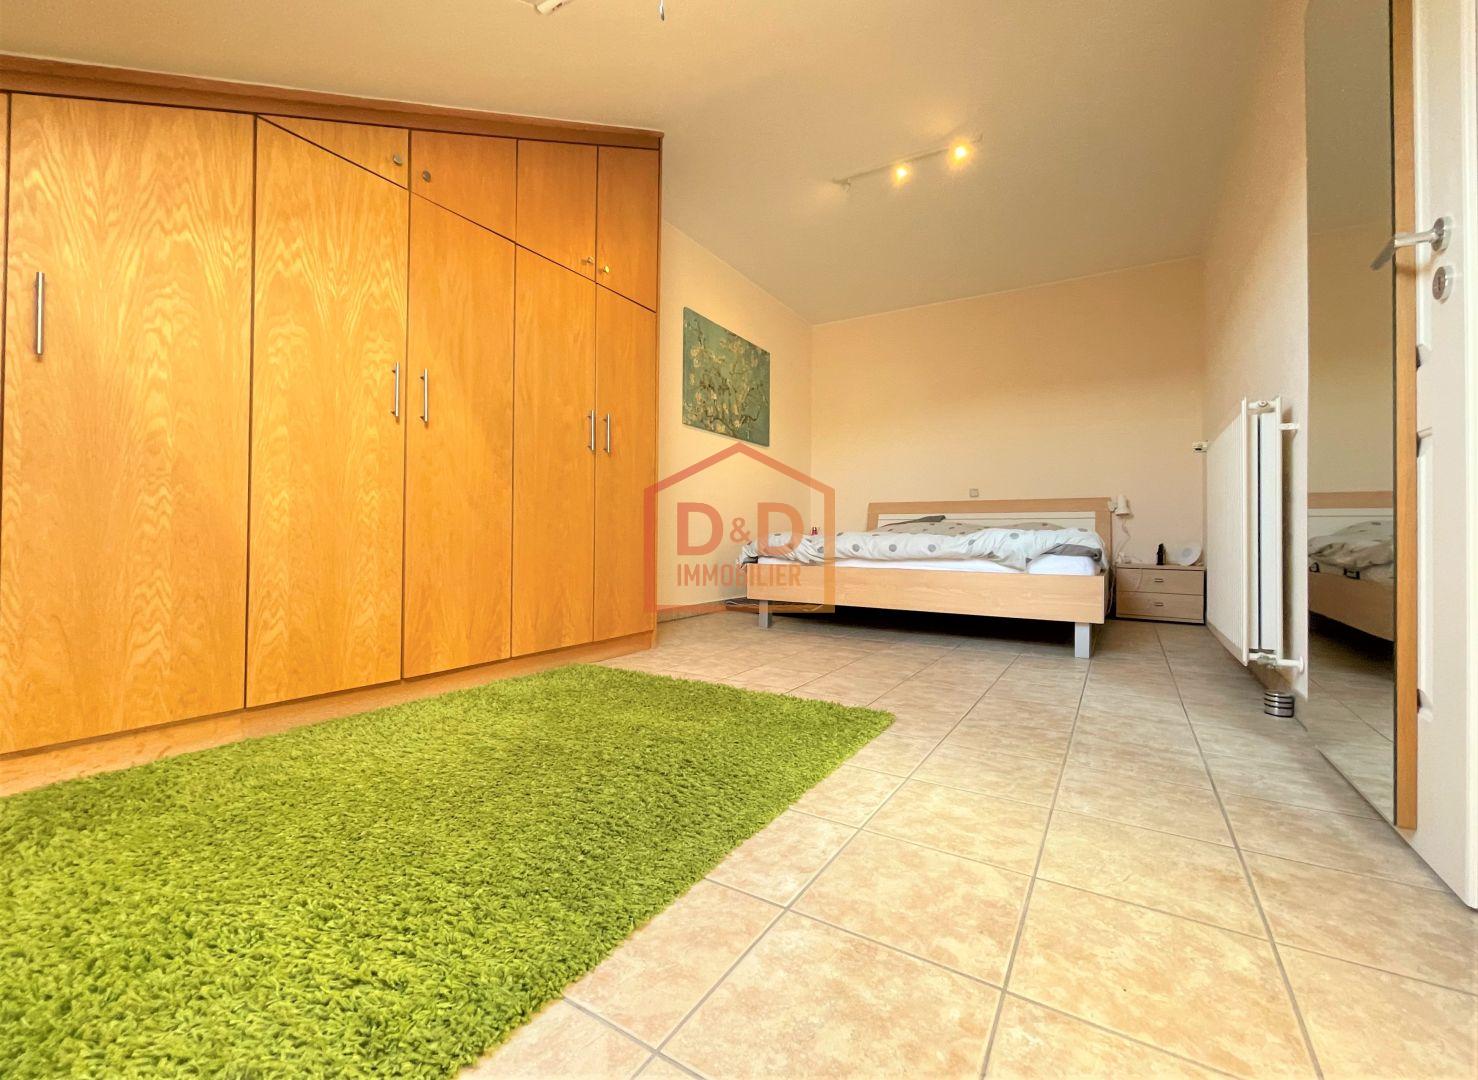 Appartement à Hesperange, 180 m², 2 chambres, 1 salle de bain, 1 garage, 1 269 990 €